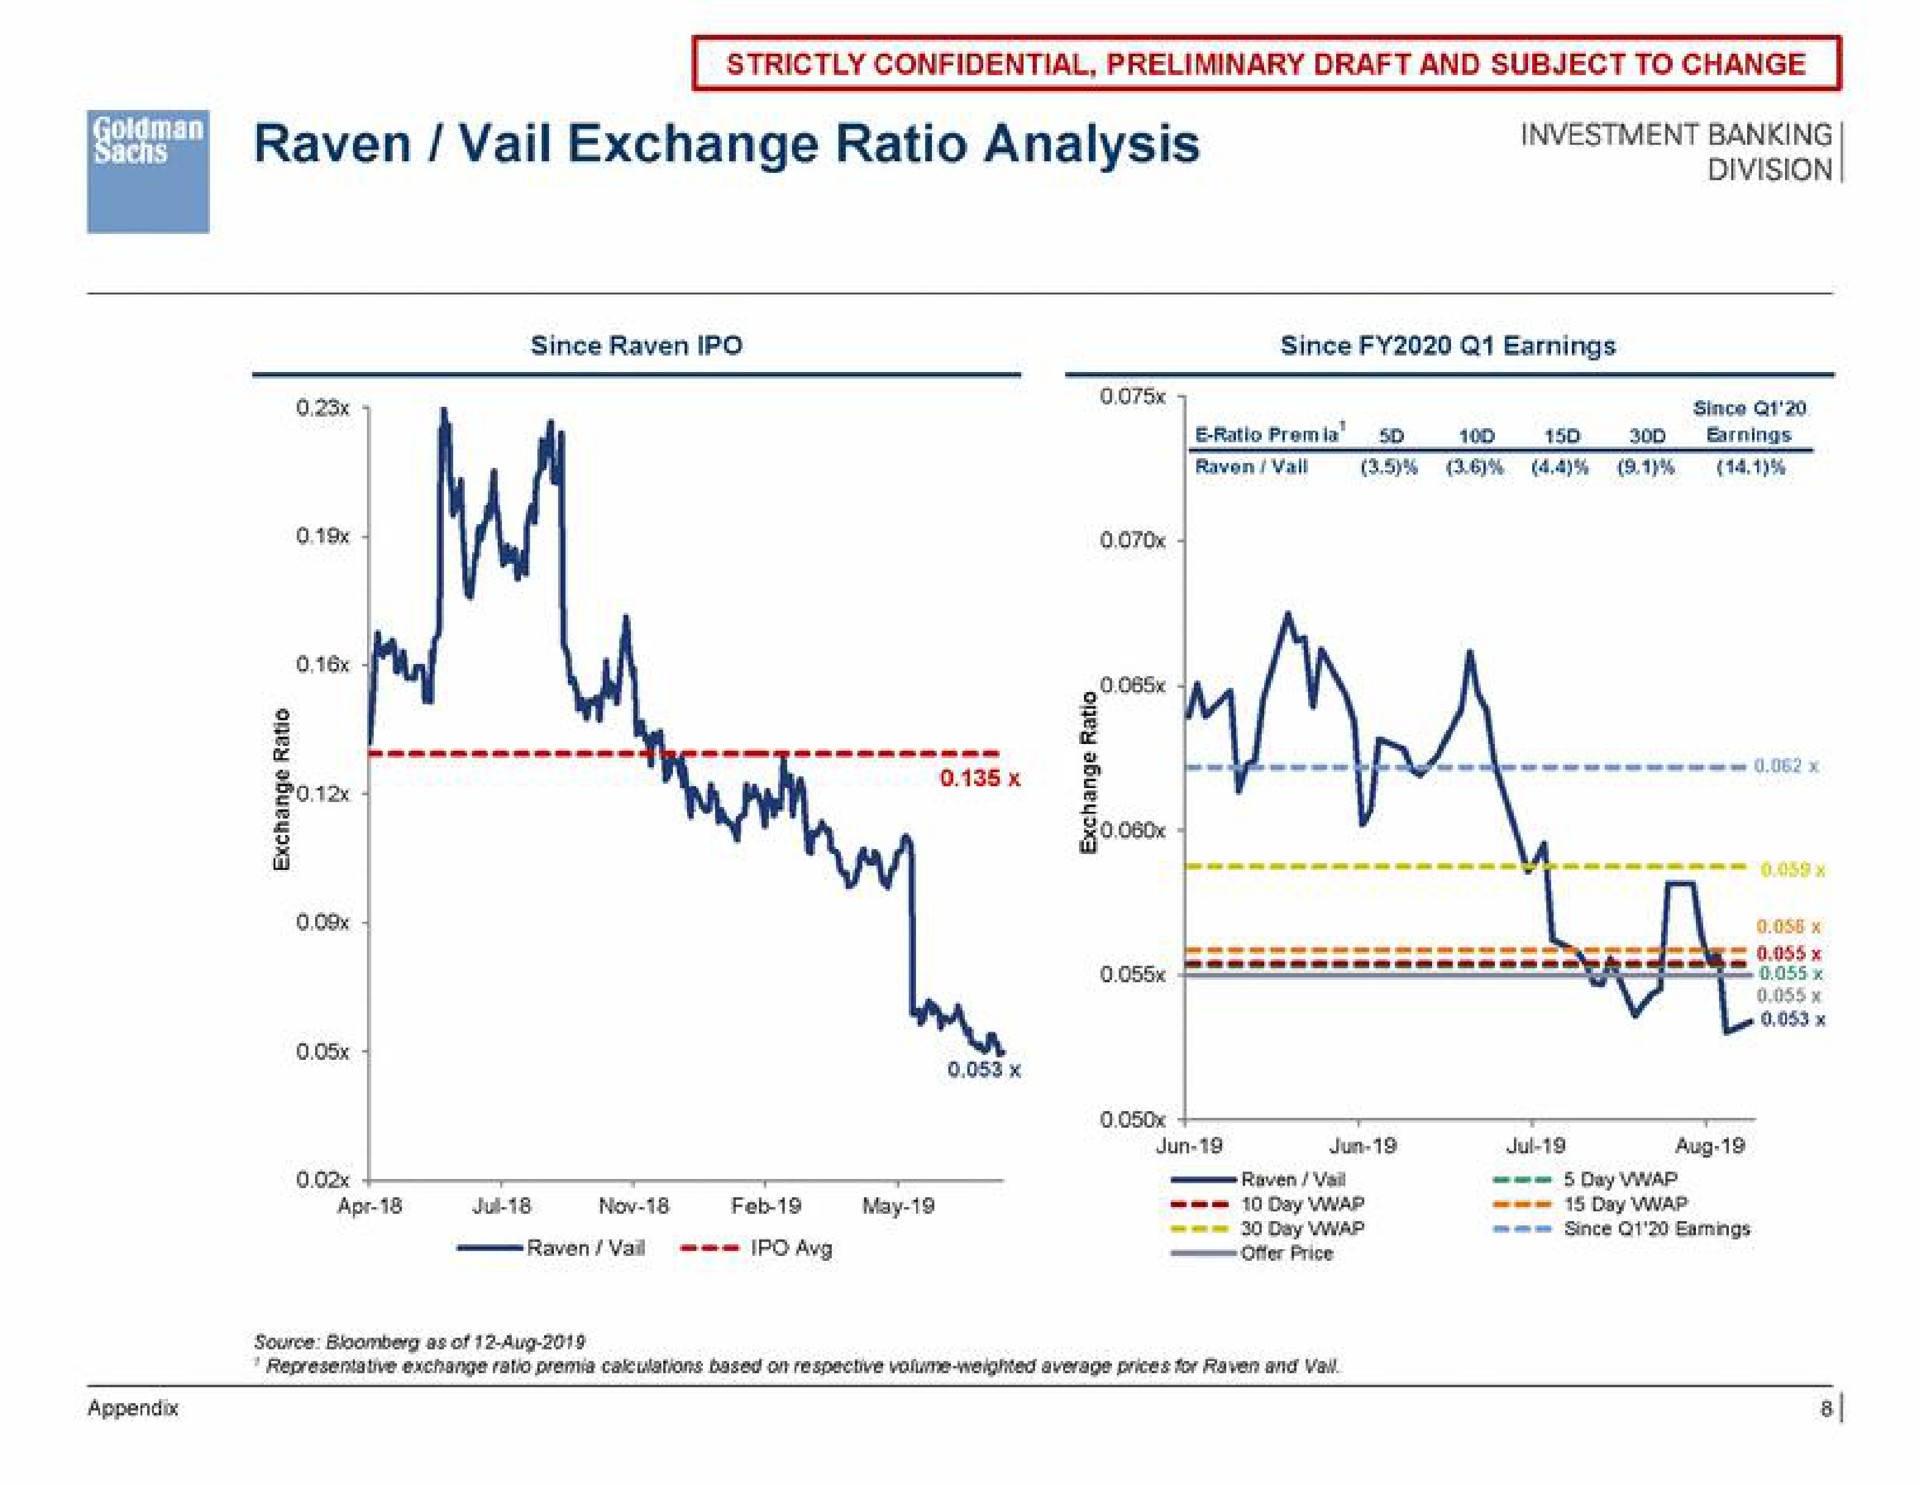 raven vail exchange ratio analysis | Goldman Sachs